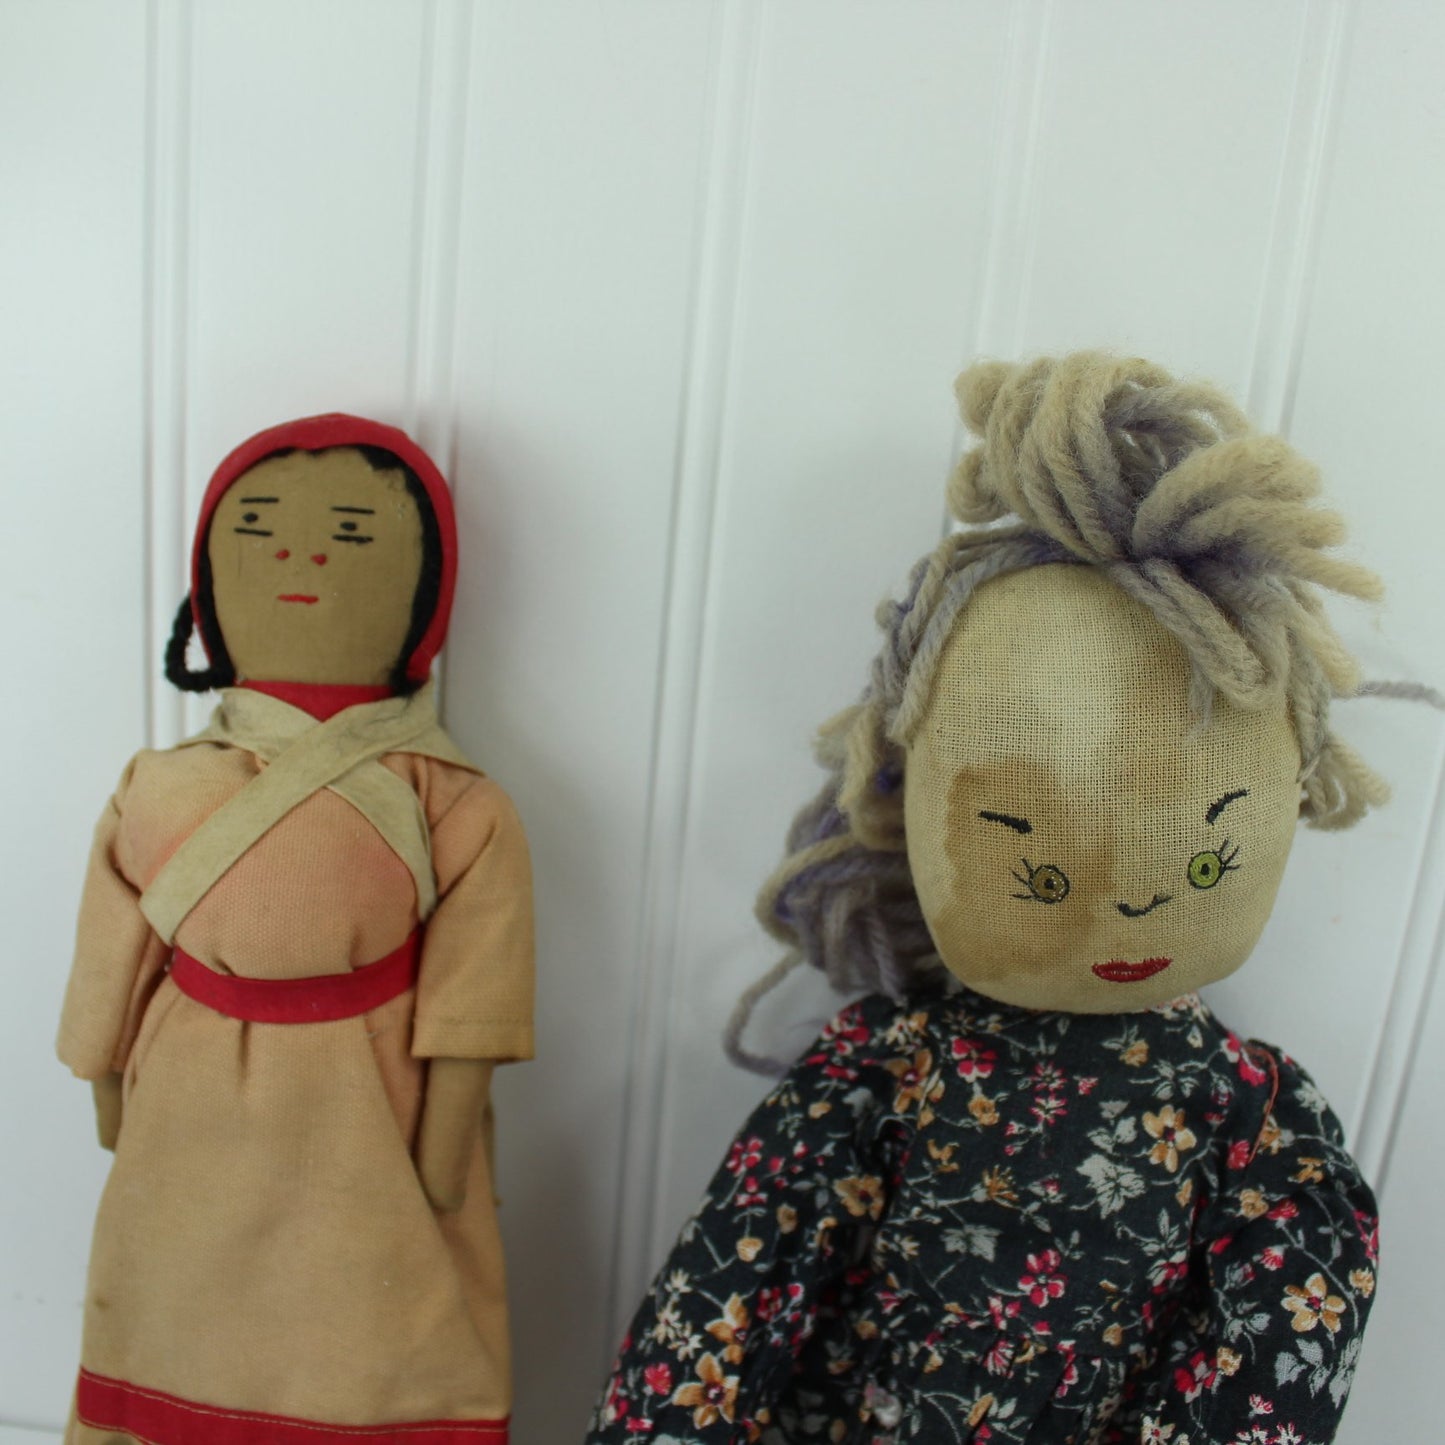 Primitive Design Dolls Plantation and Calico Dressed Embroidered Faces Cotton Fabrics